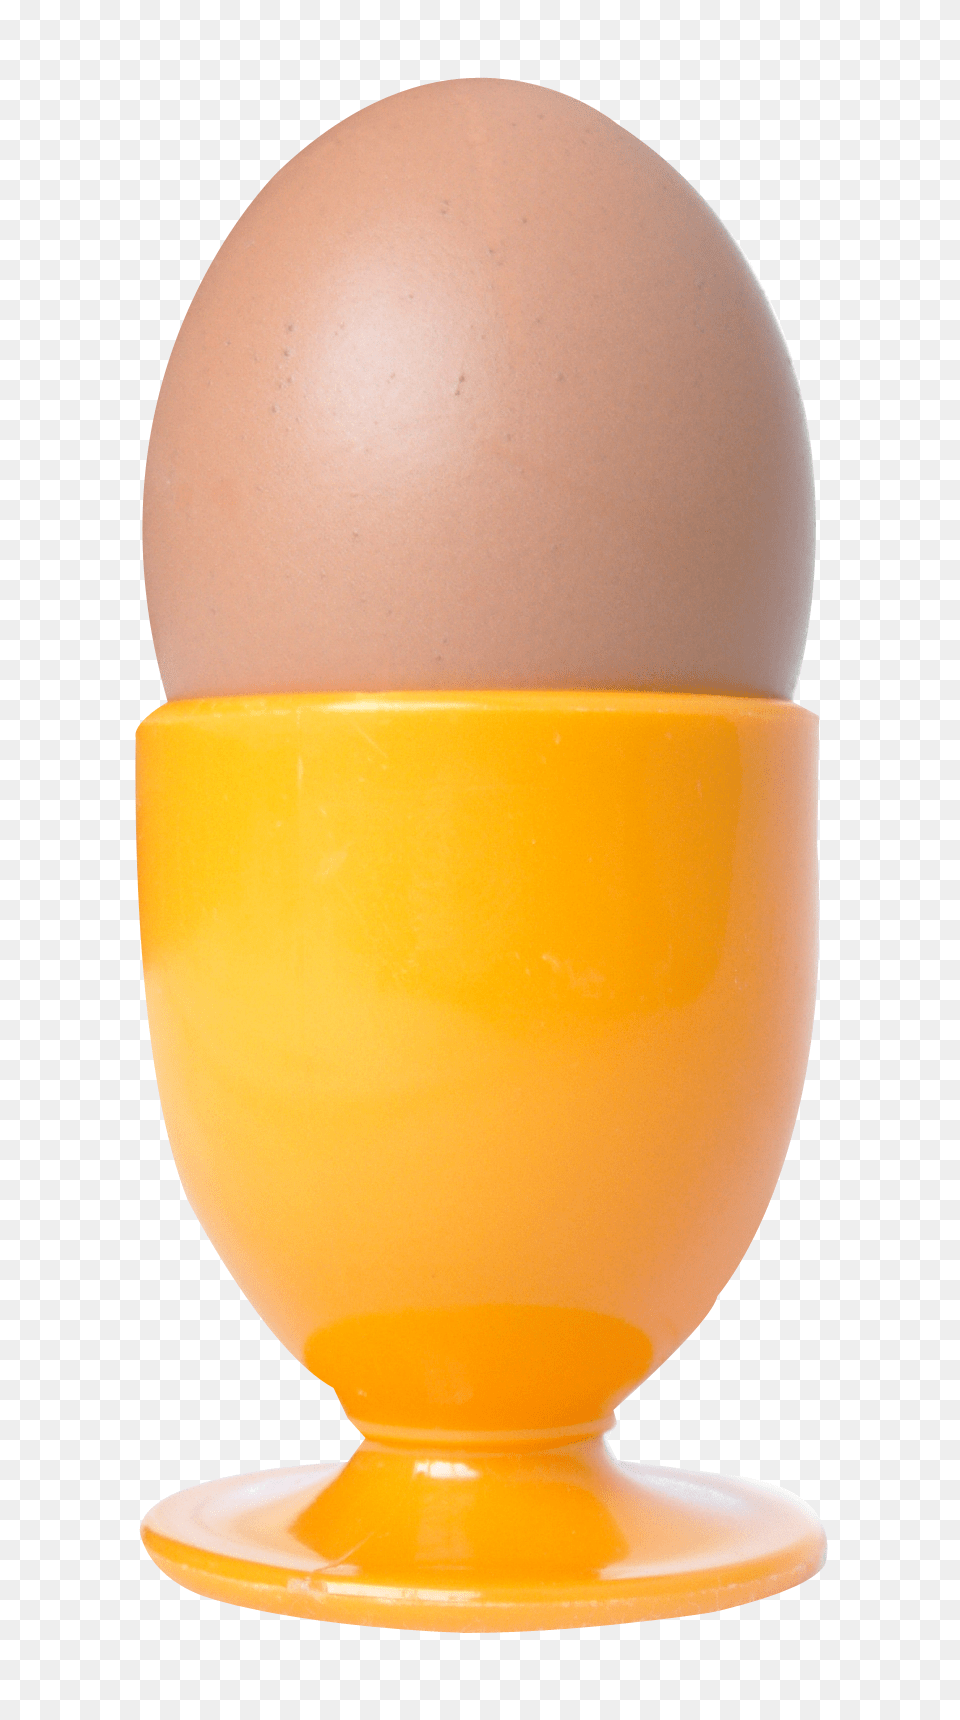 Pngpix Com Egg Image, Food Free Transparent Png